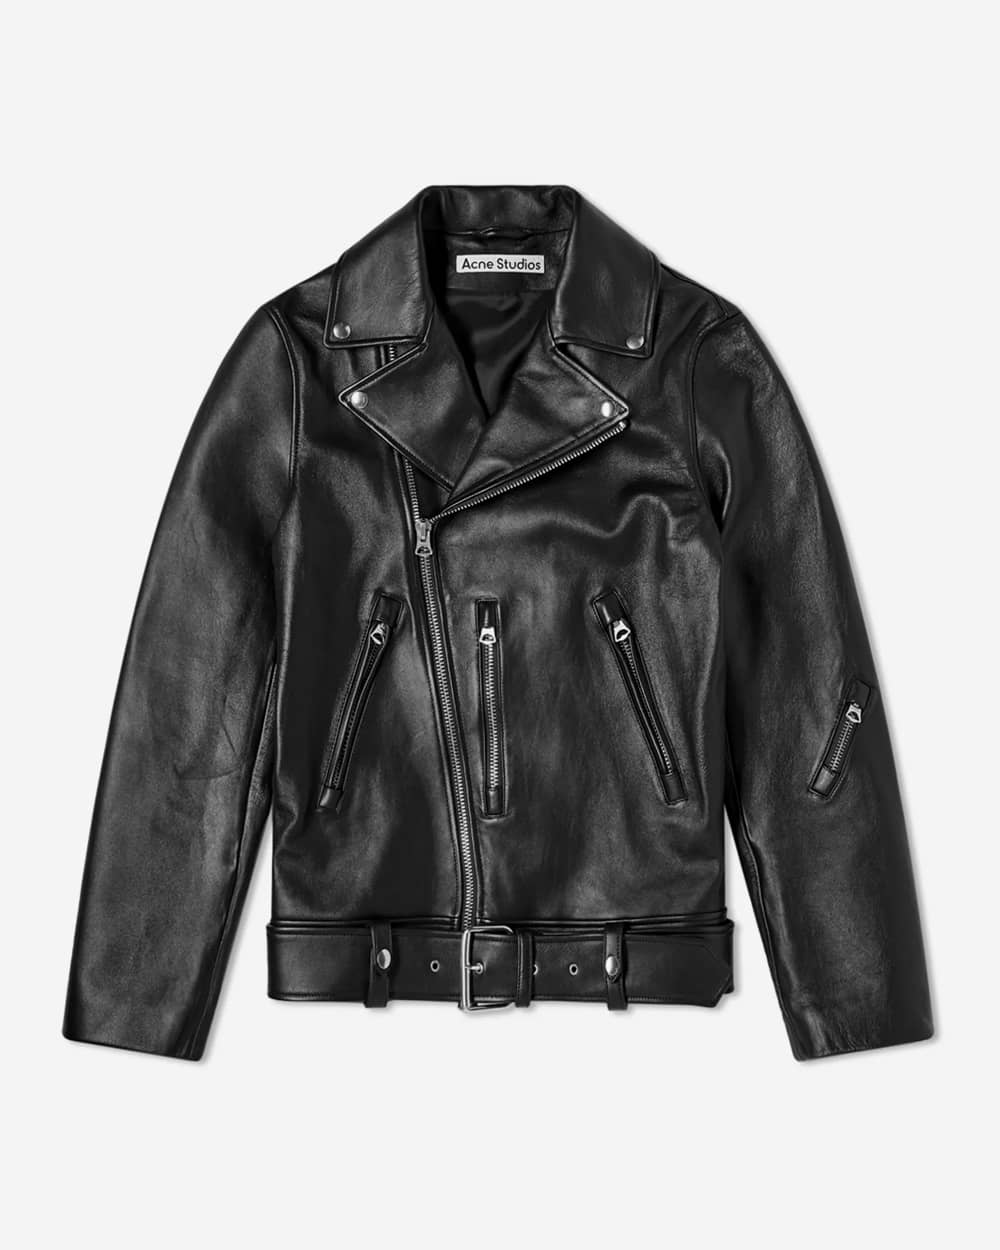 21 Luxury Leather Jacket Brands Worth The Money (2023)